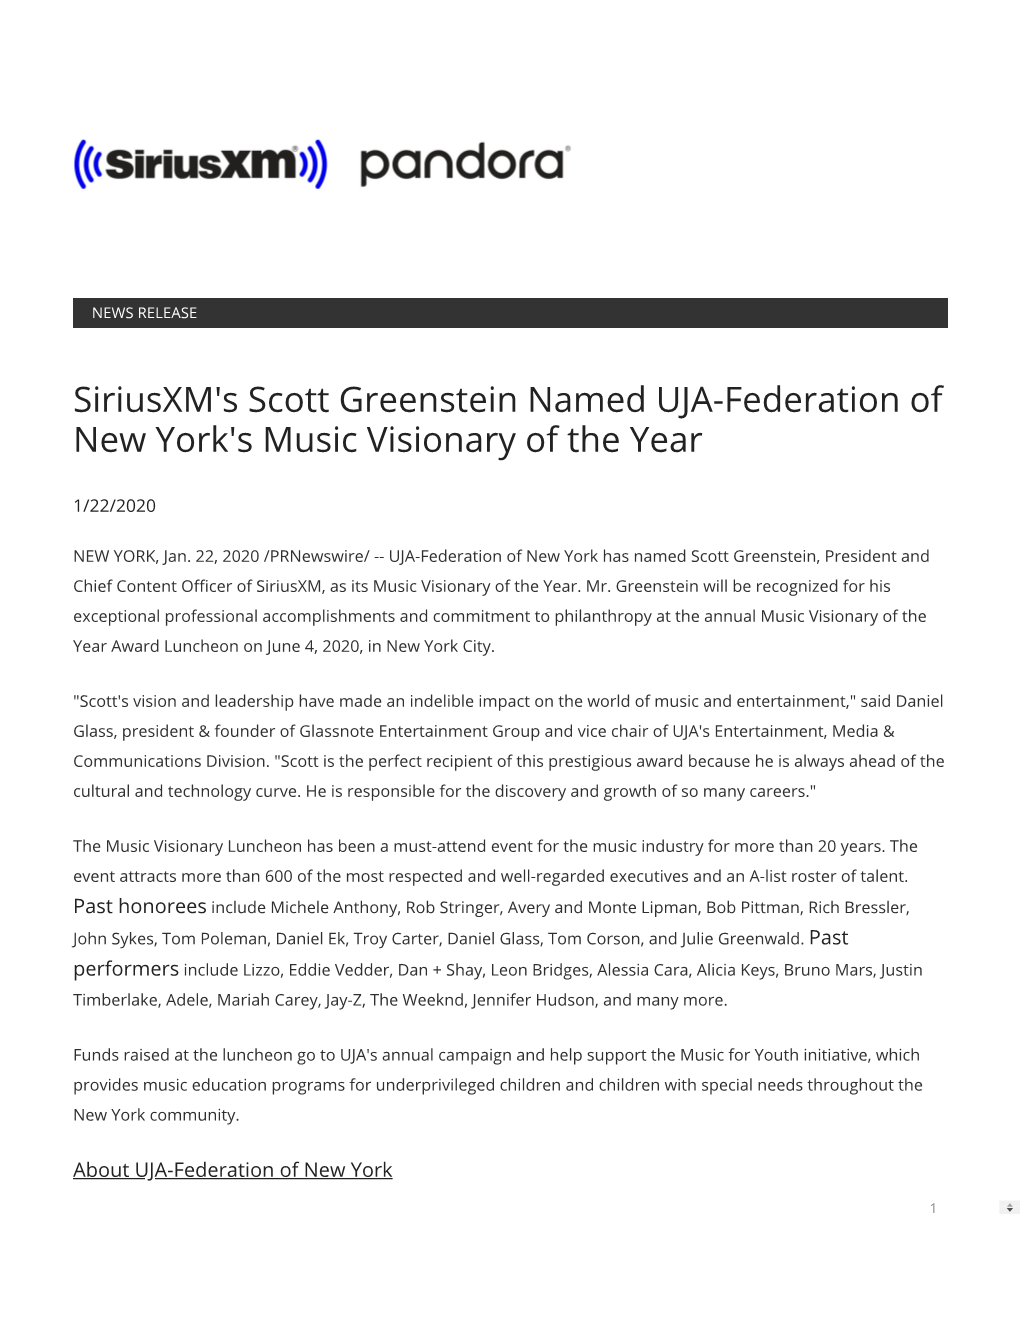 Siriusxm's Scott Greenstein Named UJA-Federation of New York's Music Visionary of the Year